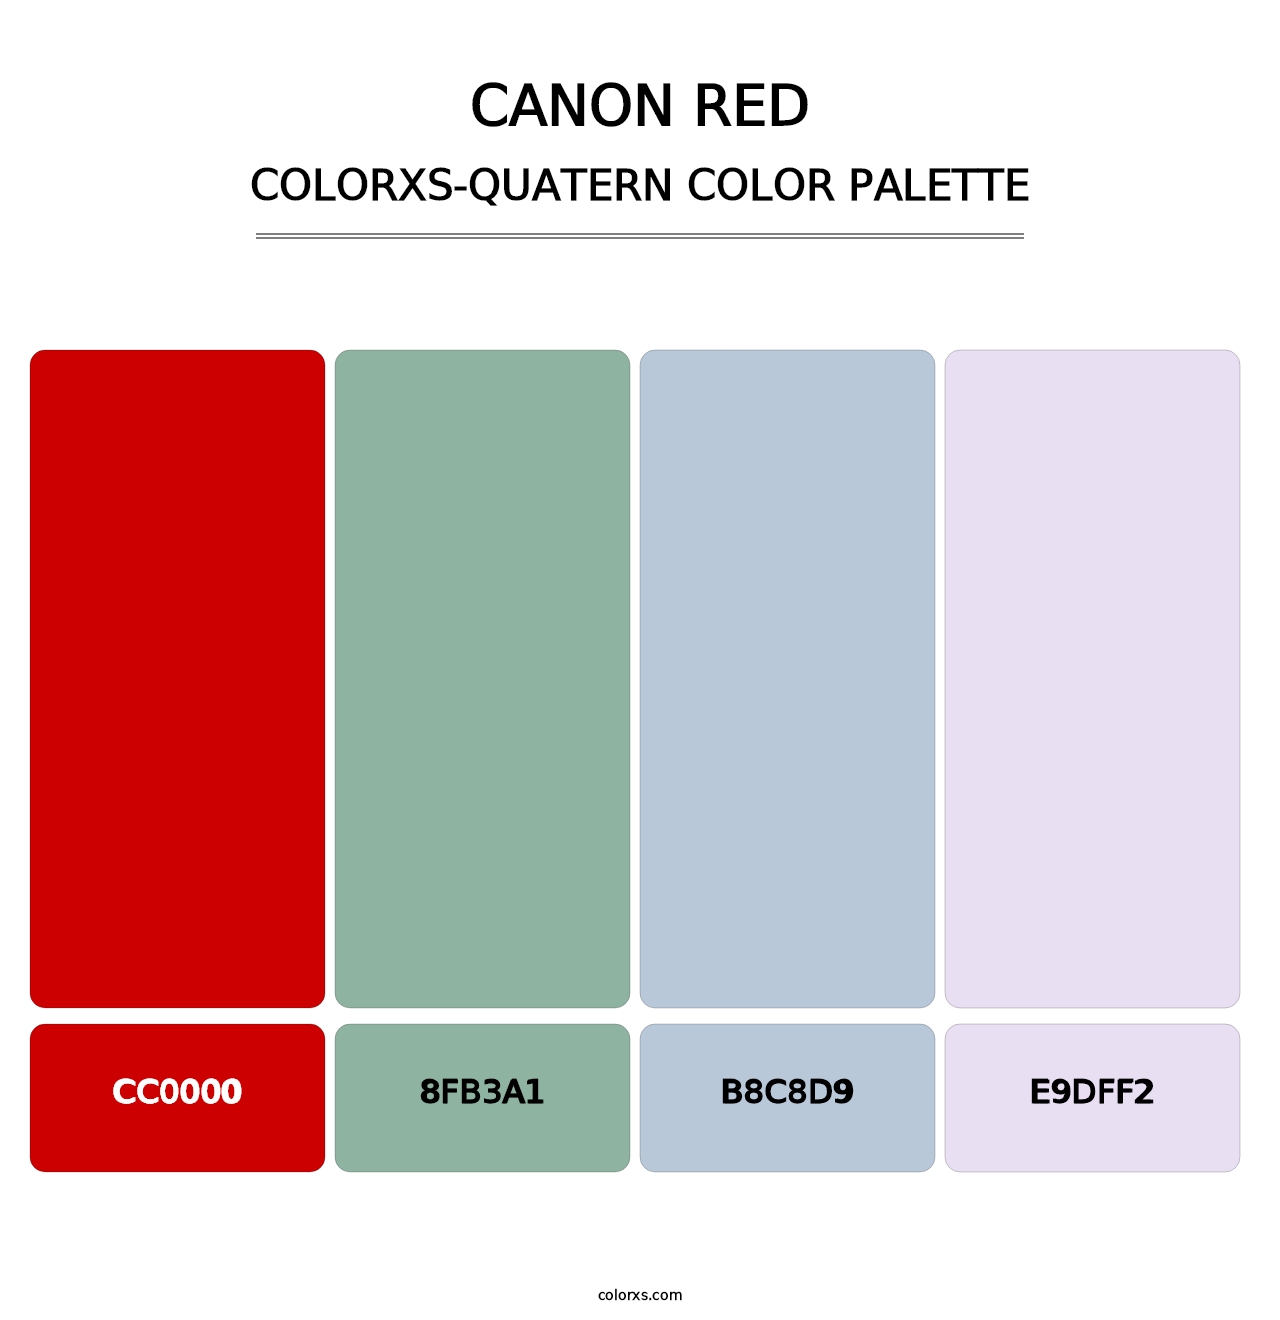 Canon Red - Colorxs Quatern Palette